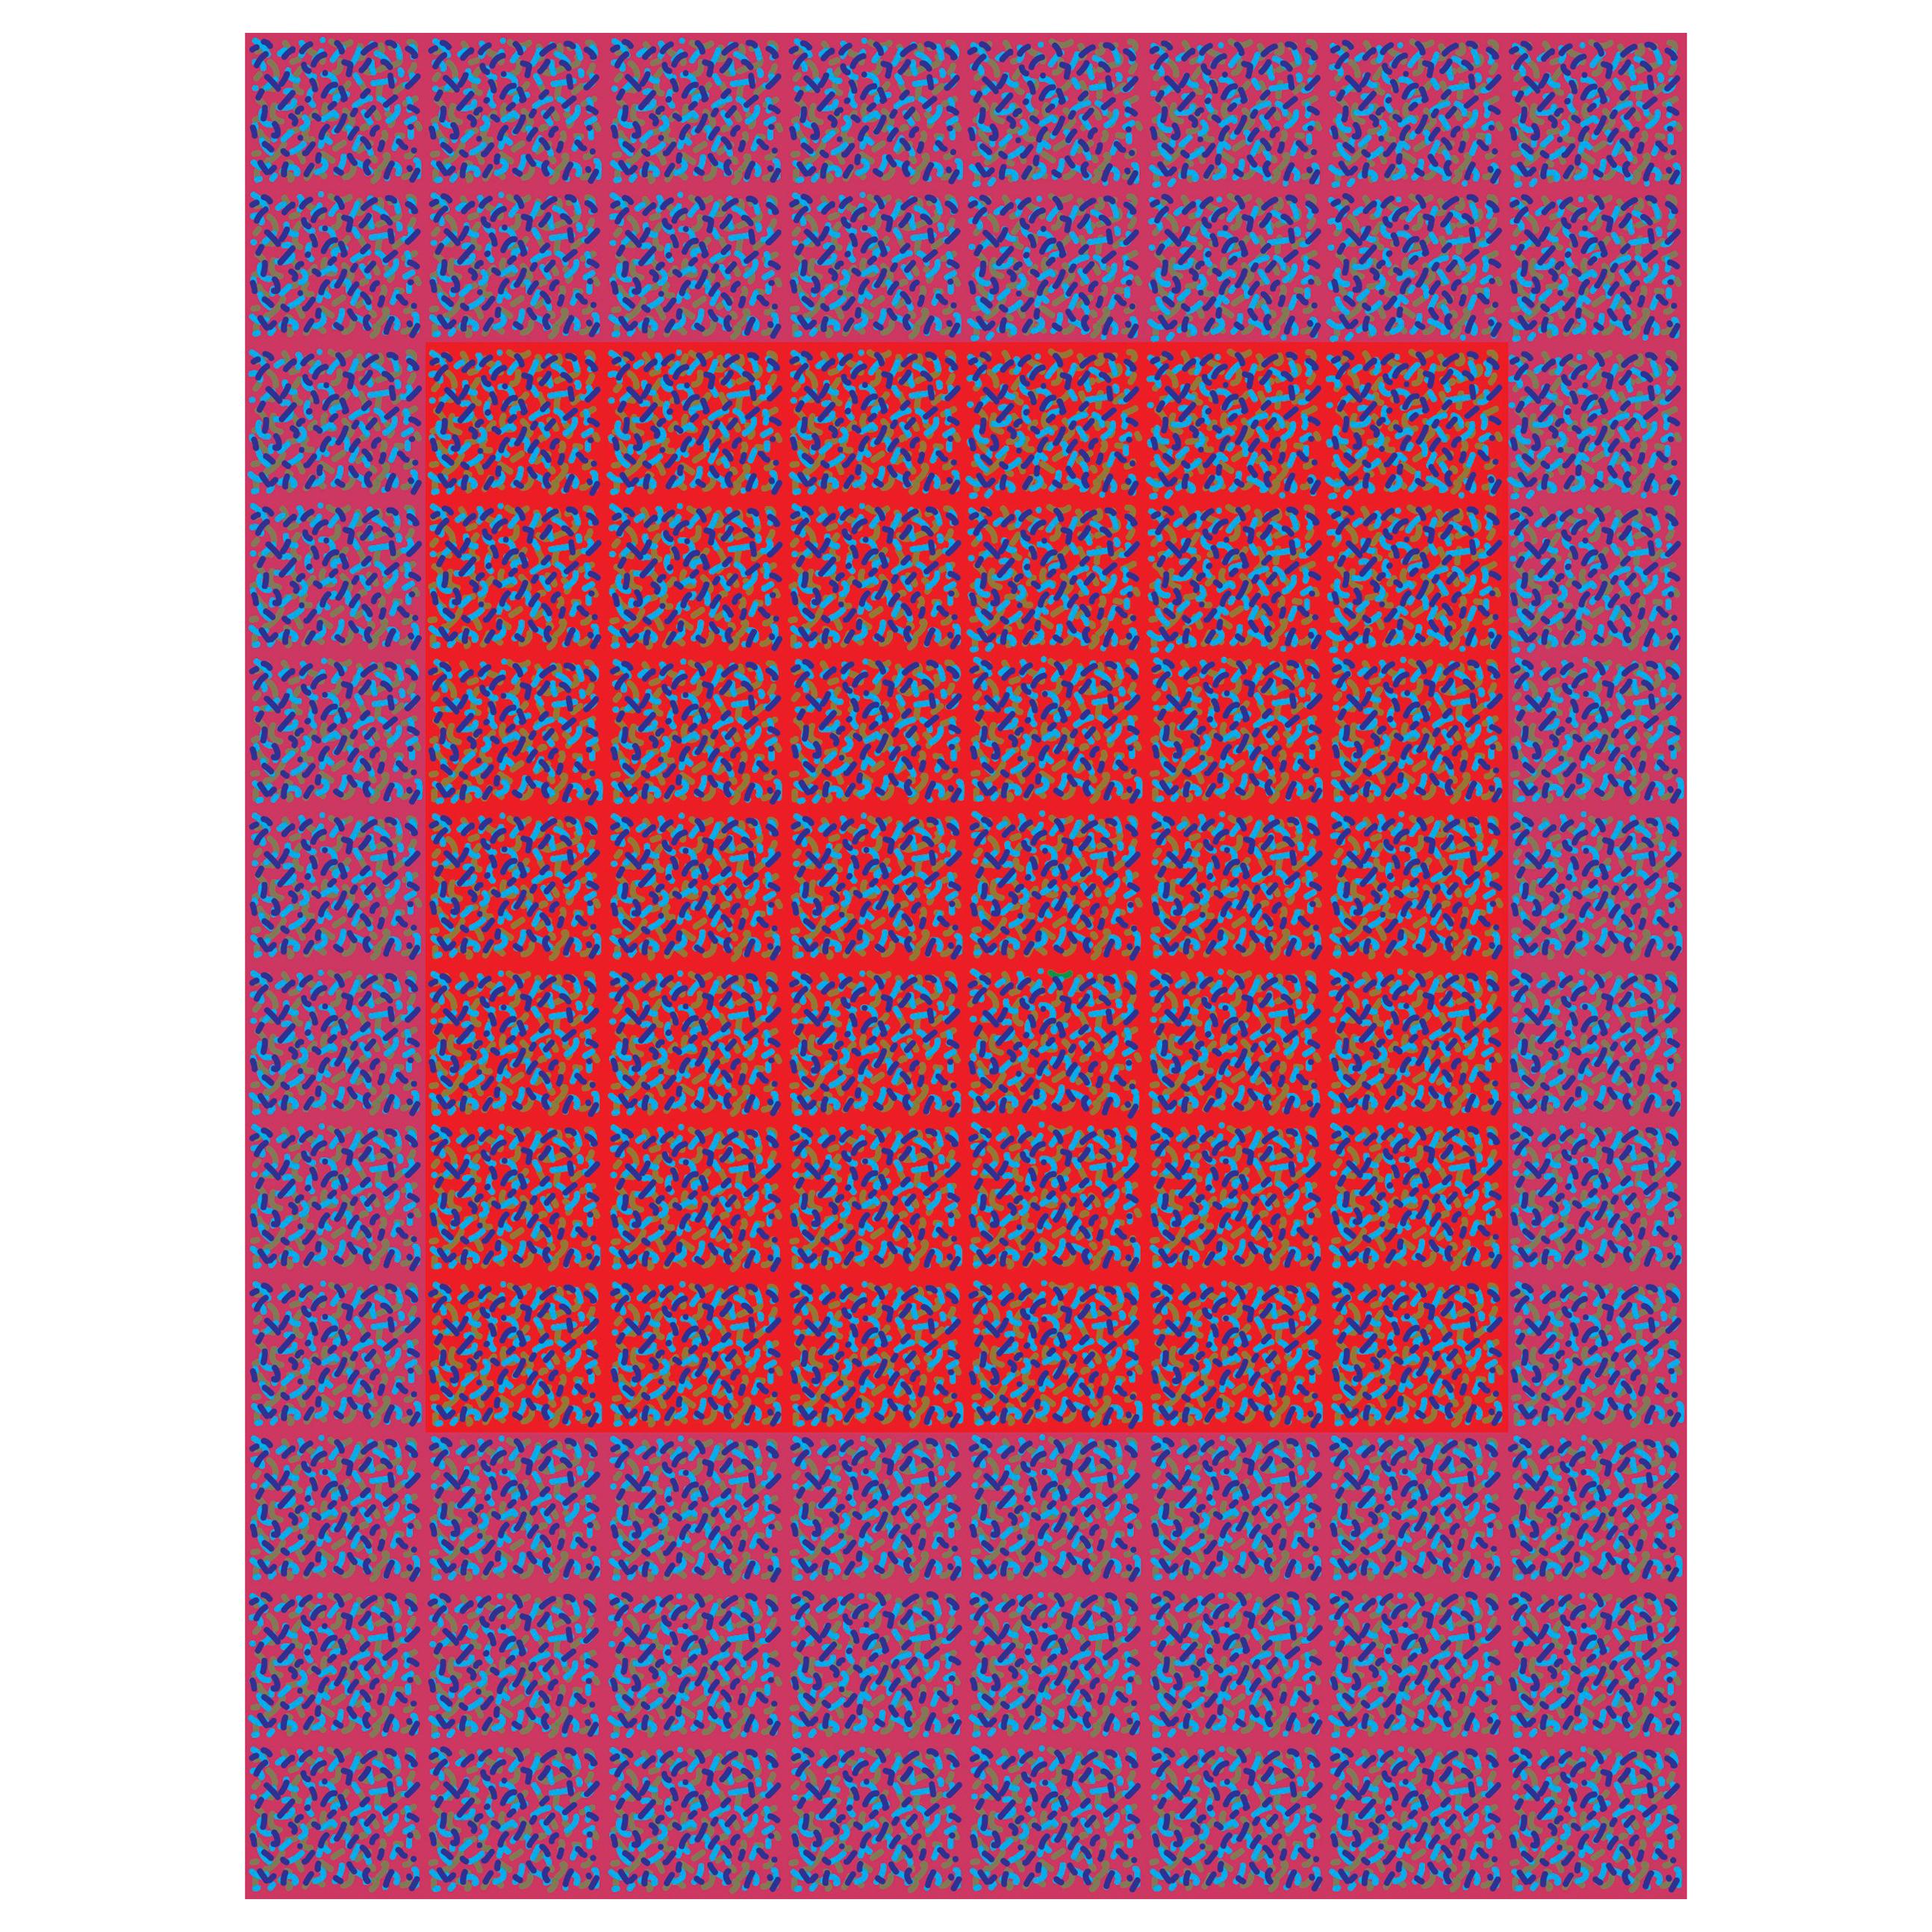 Michael Zenreich Konzeptualer abstrakter Digitaldruck ""Confetti Red Square V2"" im Angebot